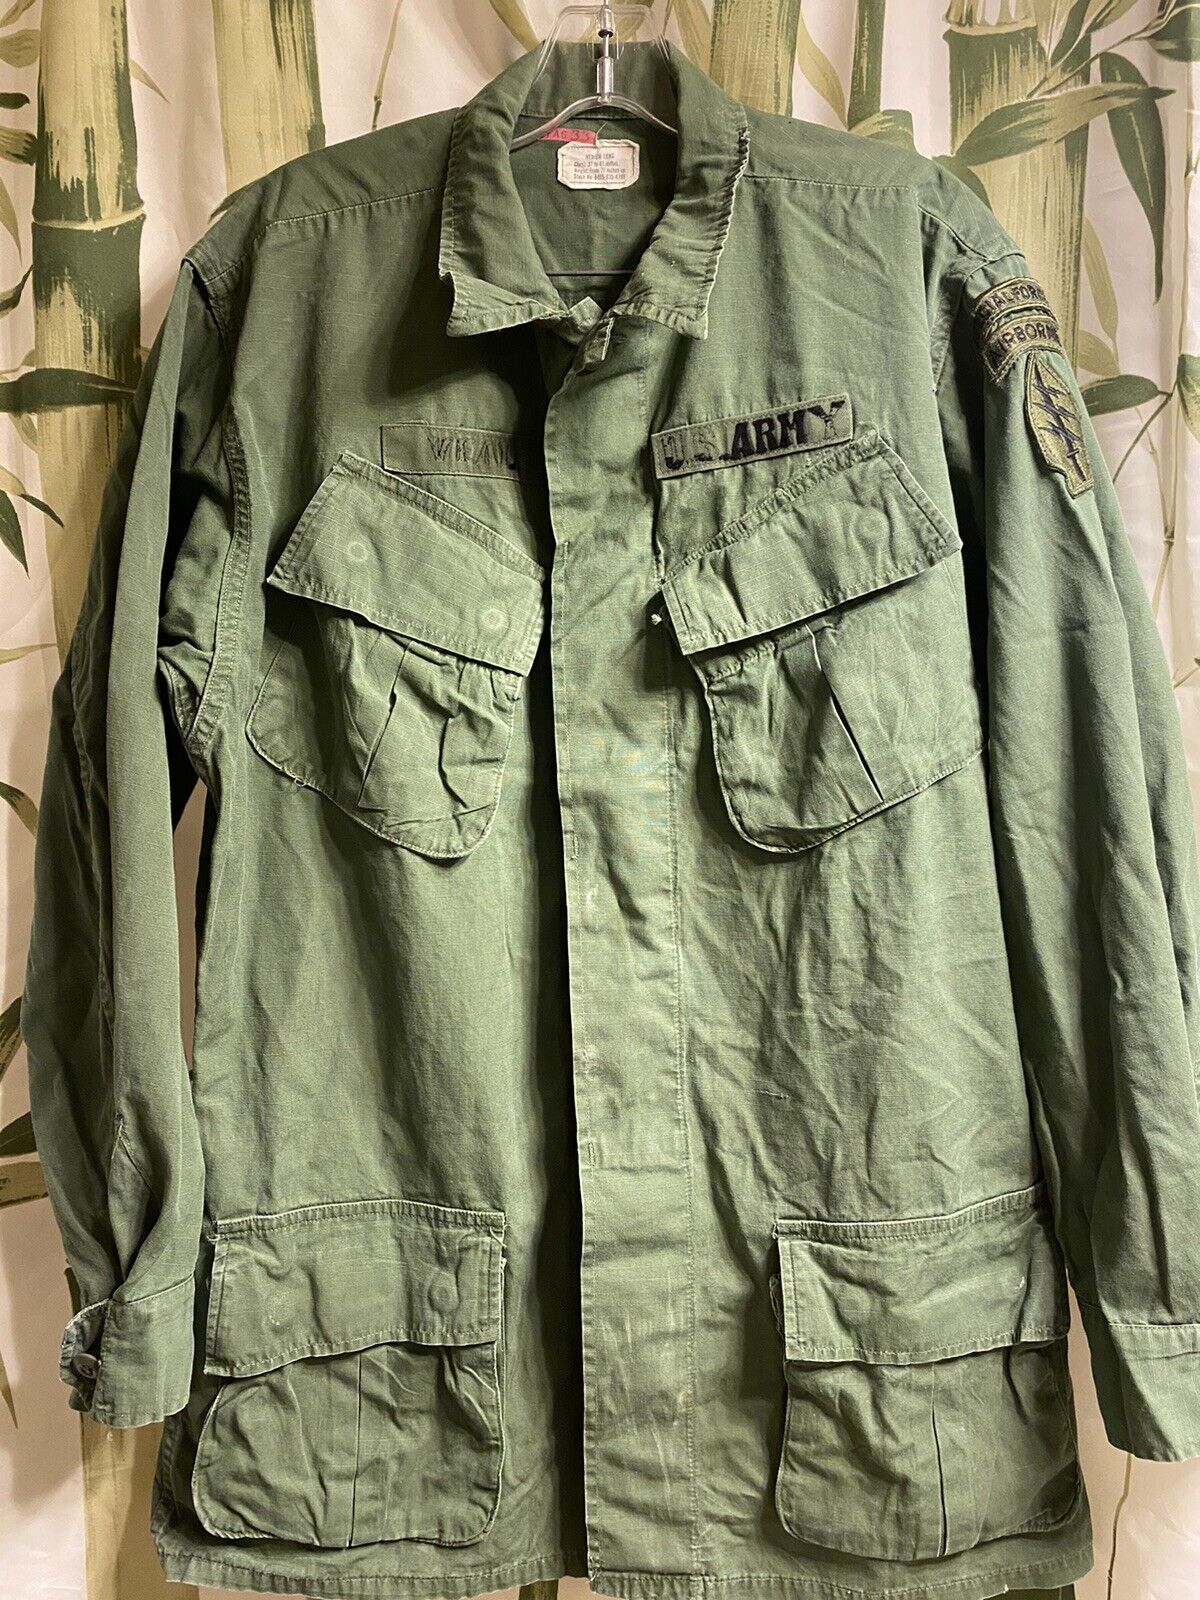 Vietnam Era Poplin OG-107 Special Forces Airborne Green Beret US Army Uniforms